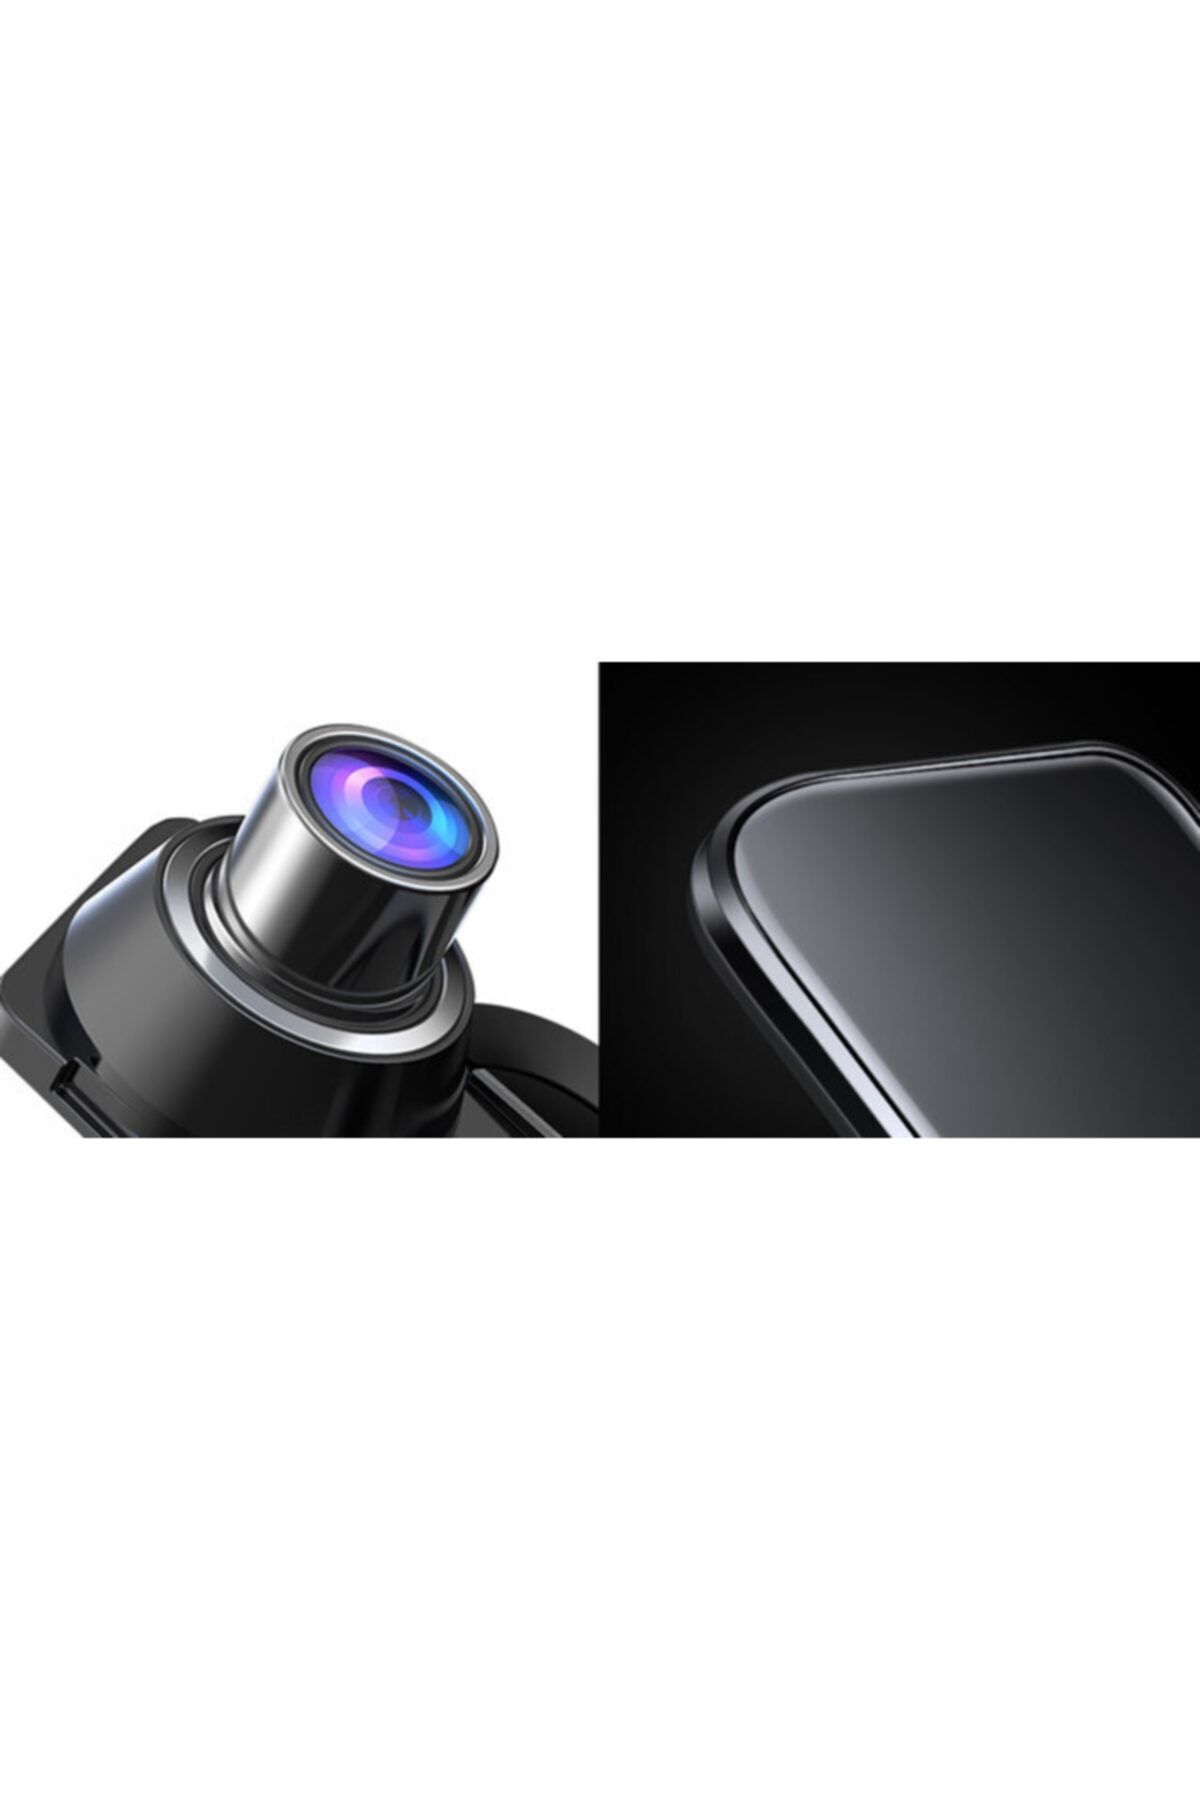 Navigold Çift Kameralı Dokunmatik Tam Ekran Ayna Kamera 1080 P Fhd 170 ' Geniş Lens G Sensör Park Modu